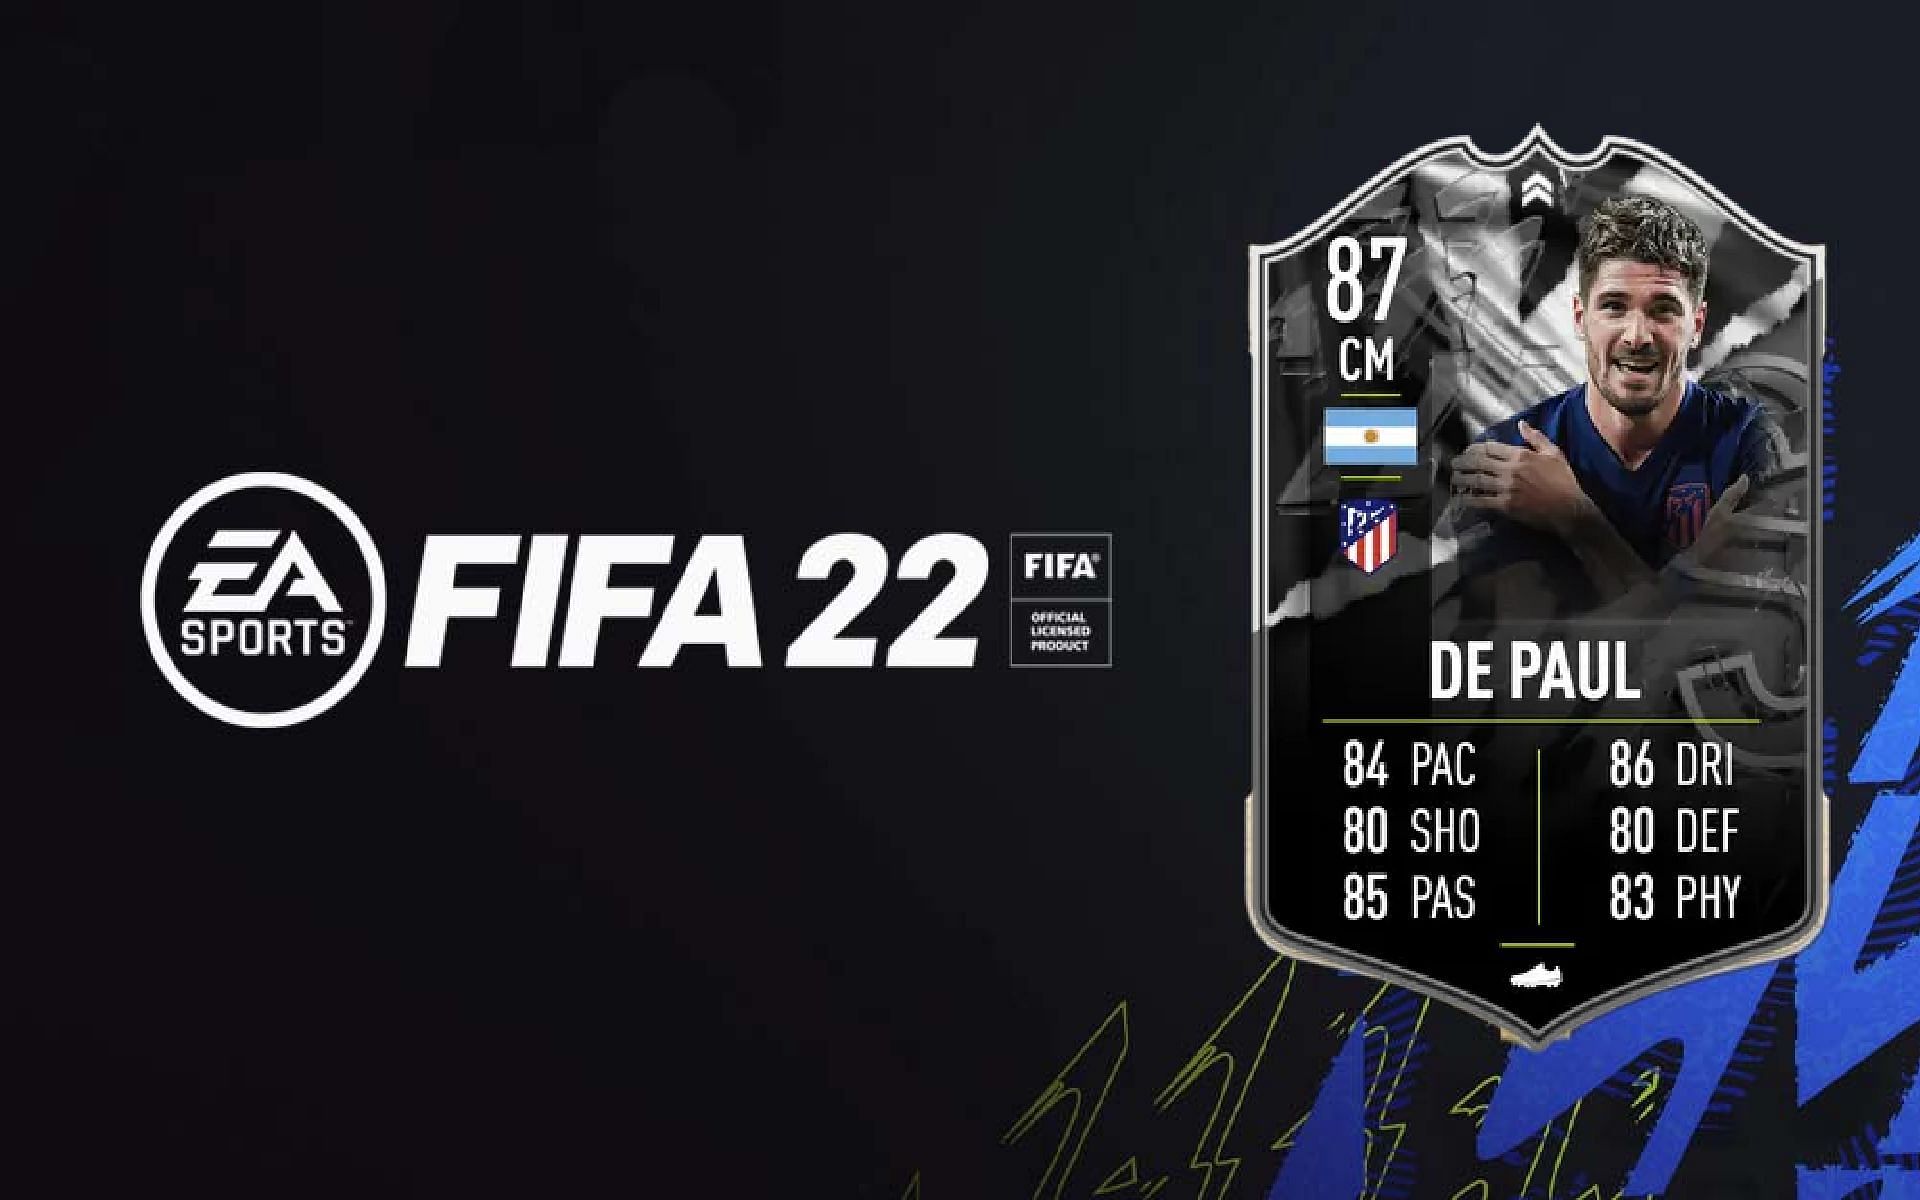 Rodrigo De Paul Showdown card in FIFA 22 Ultimate Team (Image via Sportskeeda)